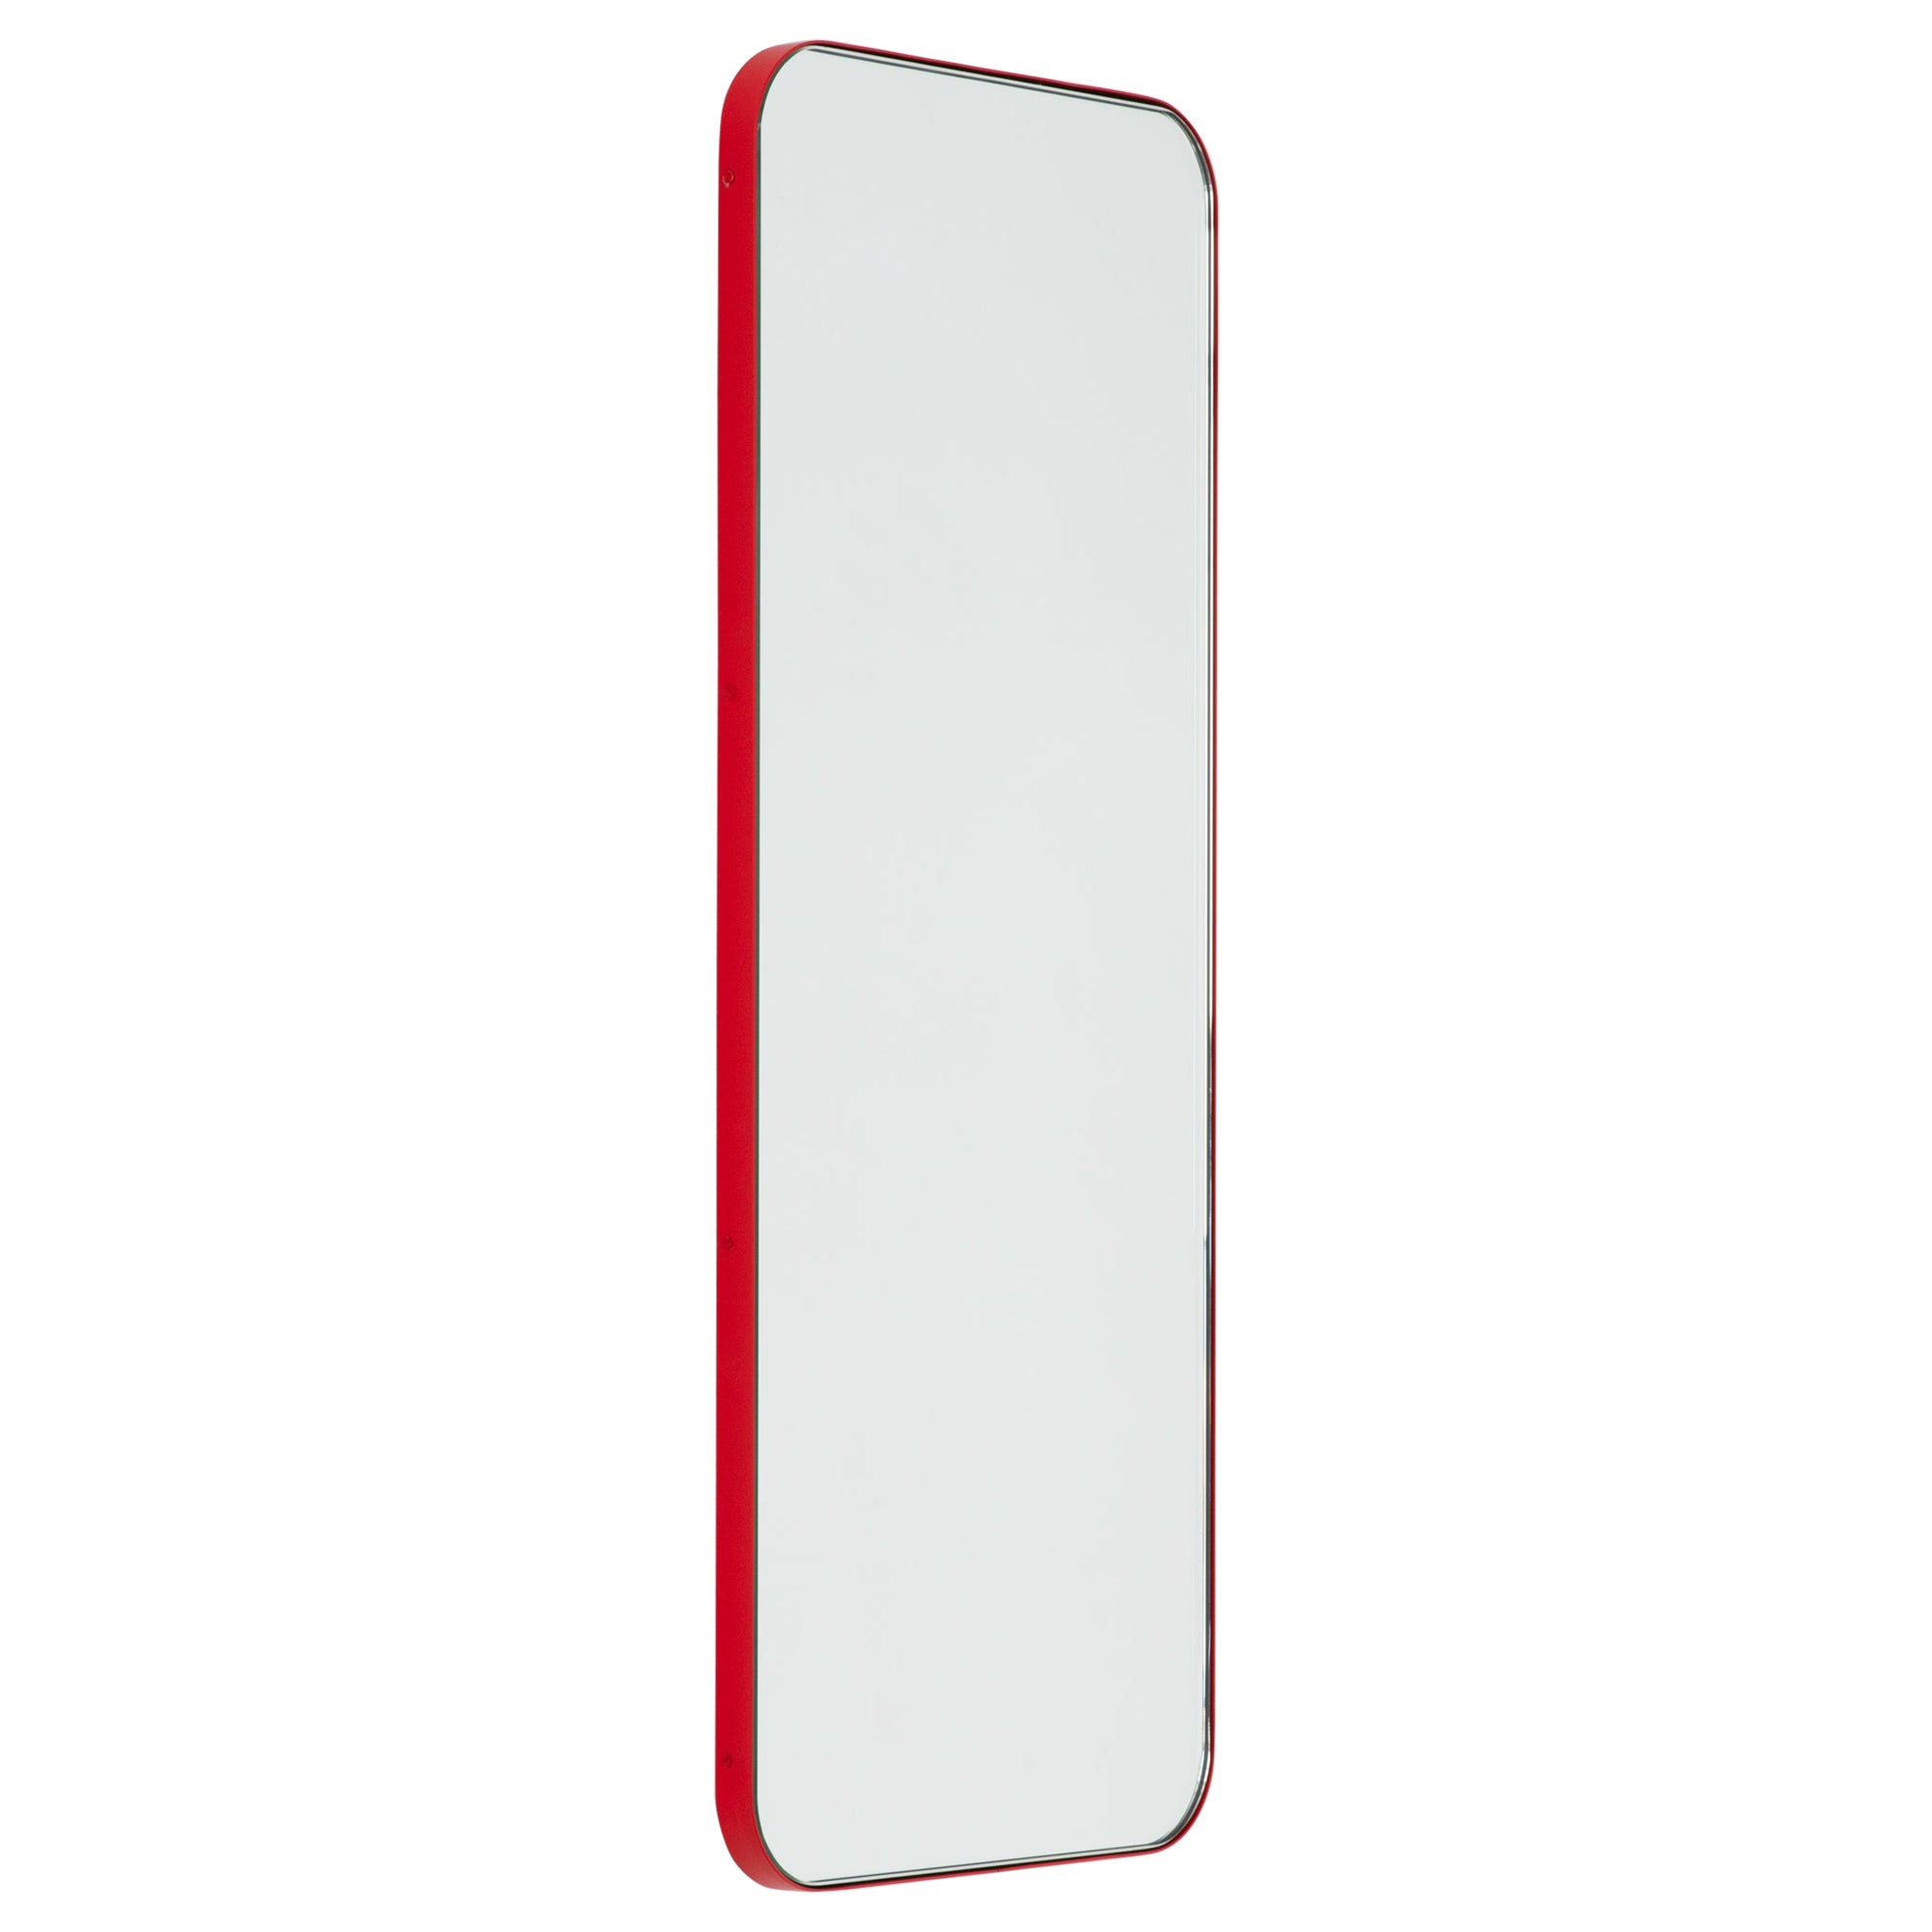 Quadris Rectangular Modern Mirror with a Red Frame, XL